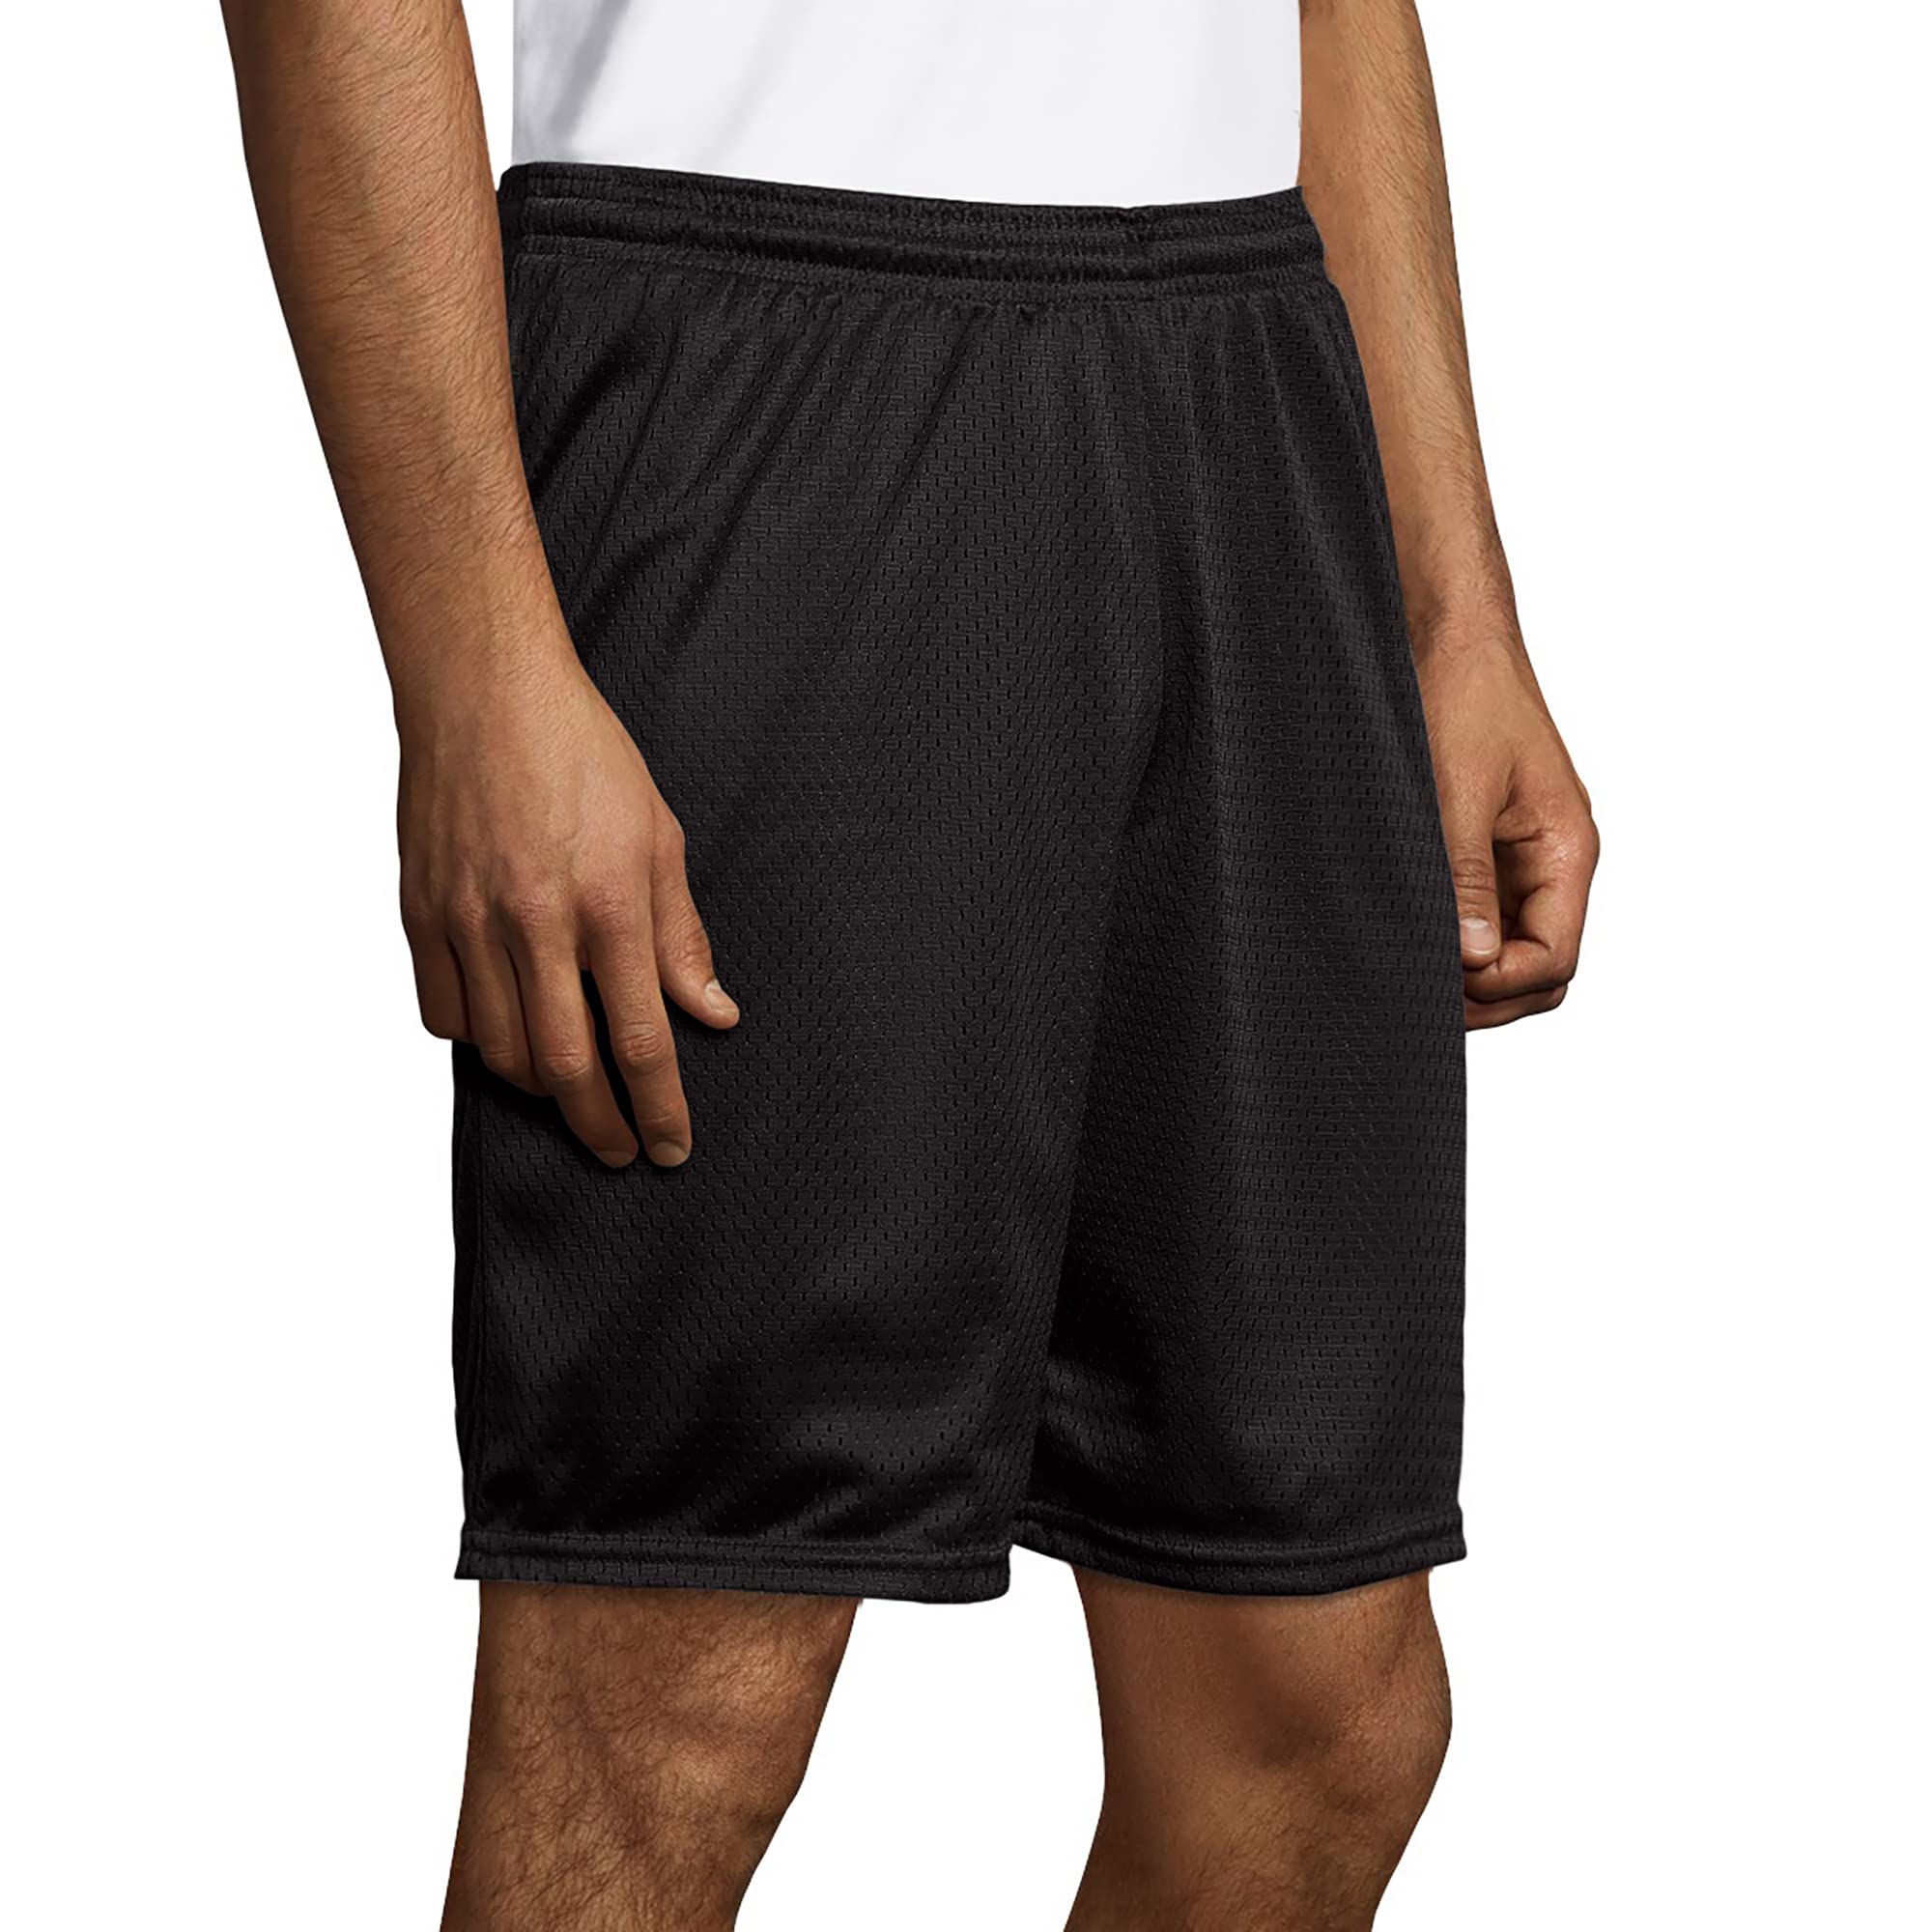 Hanes Sport Men's Mesh Pocket Shorts, Men’s Performance Gear Shorts, Men’s Athletic Shorts, 9